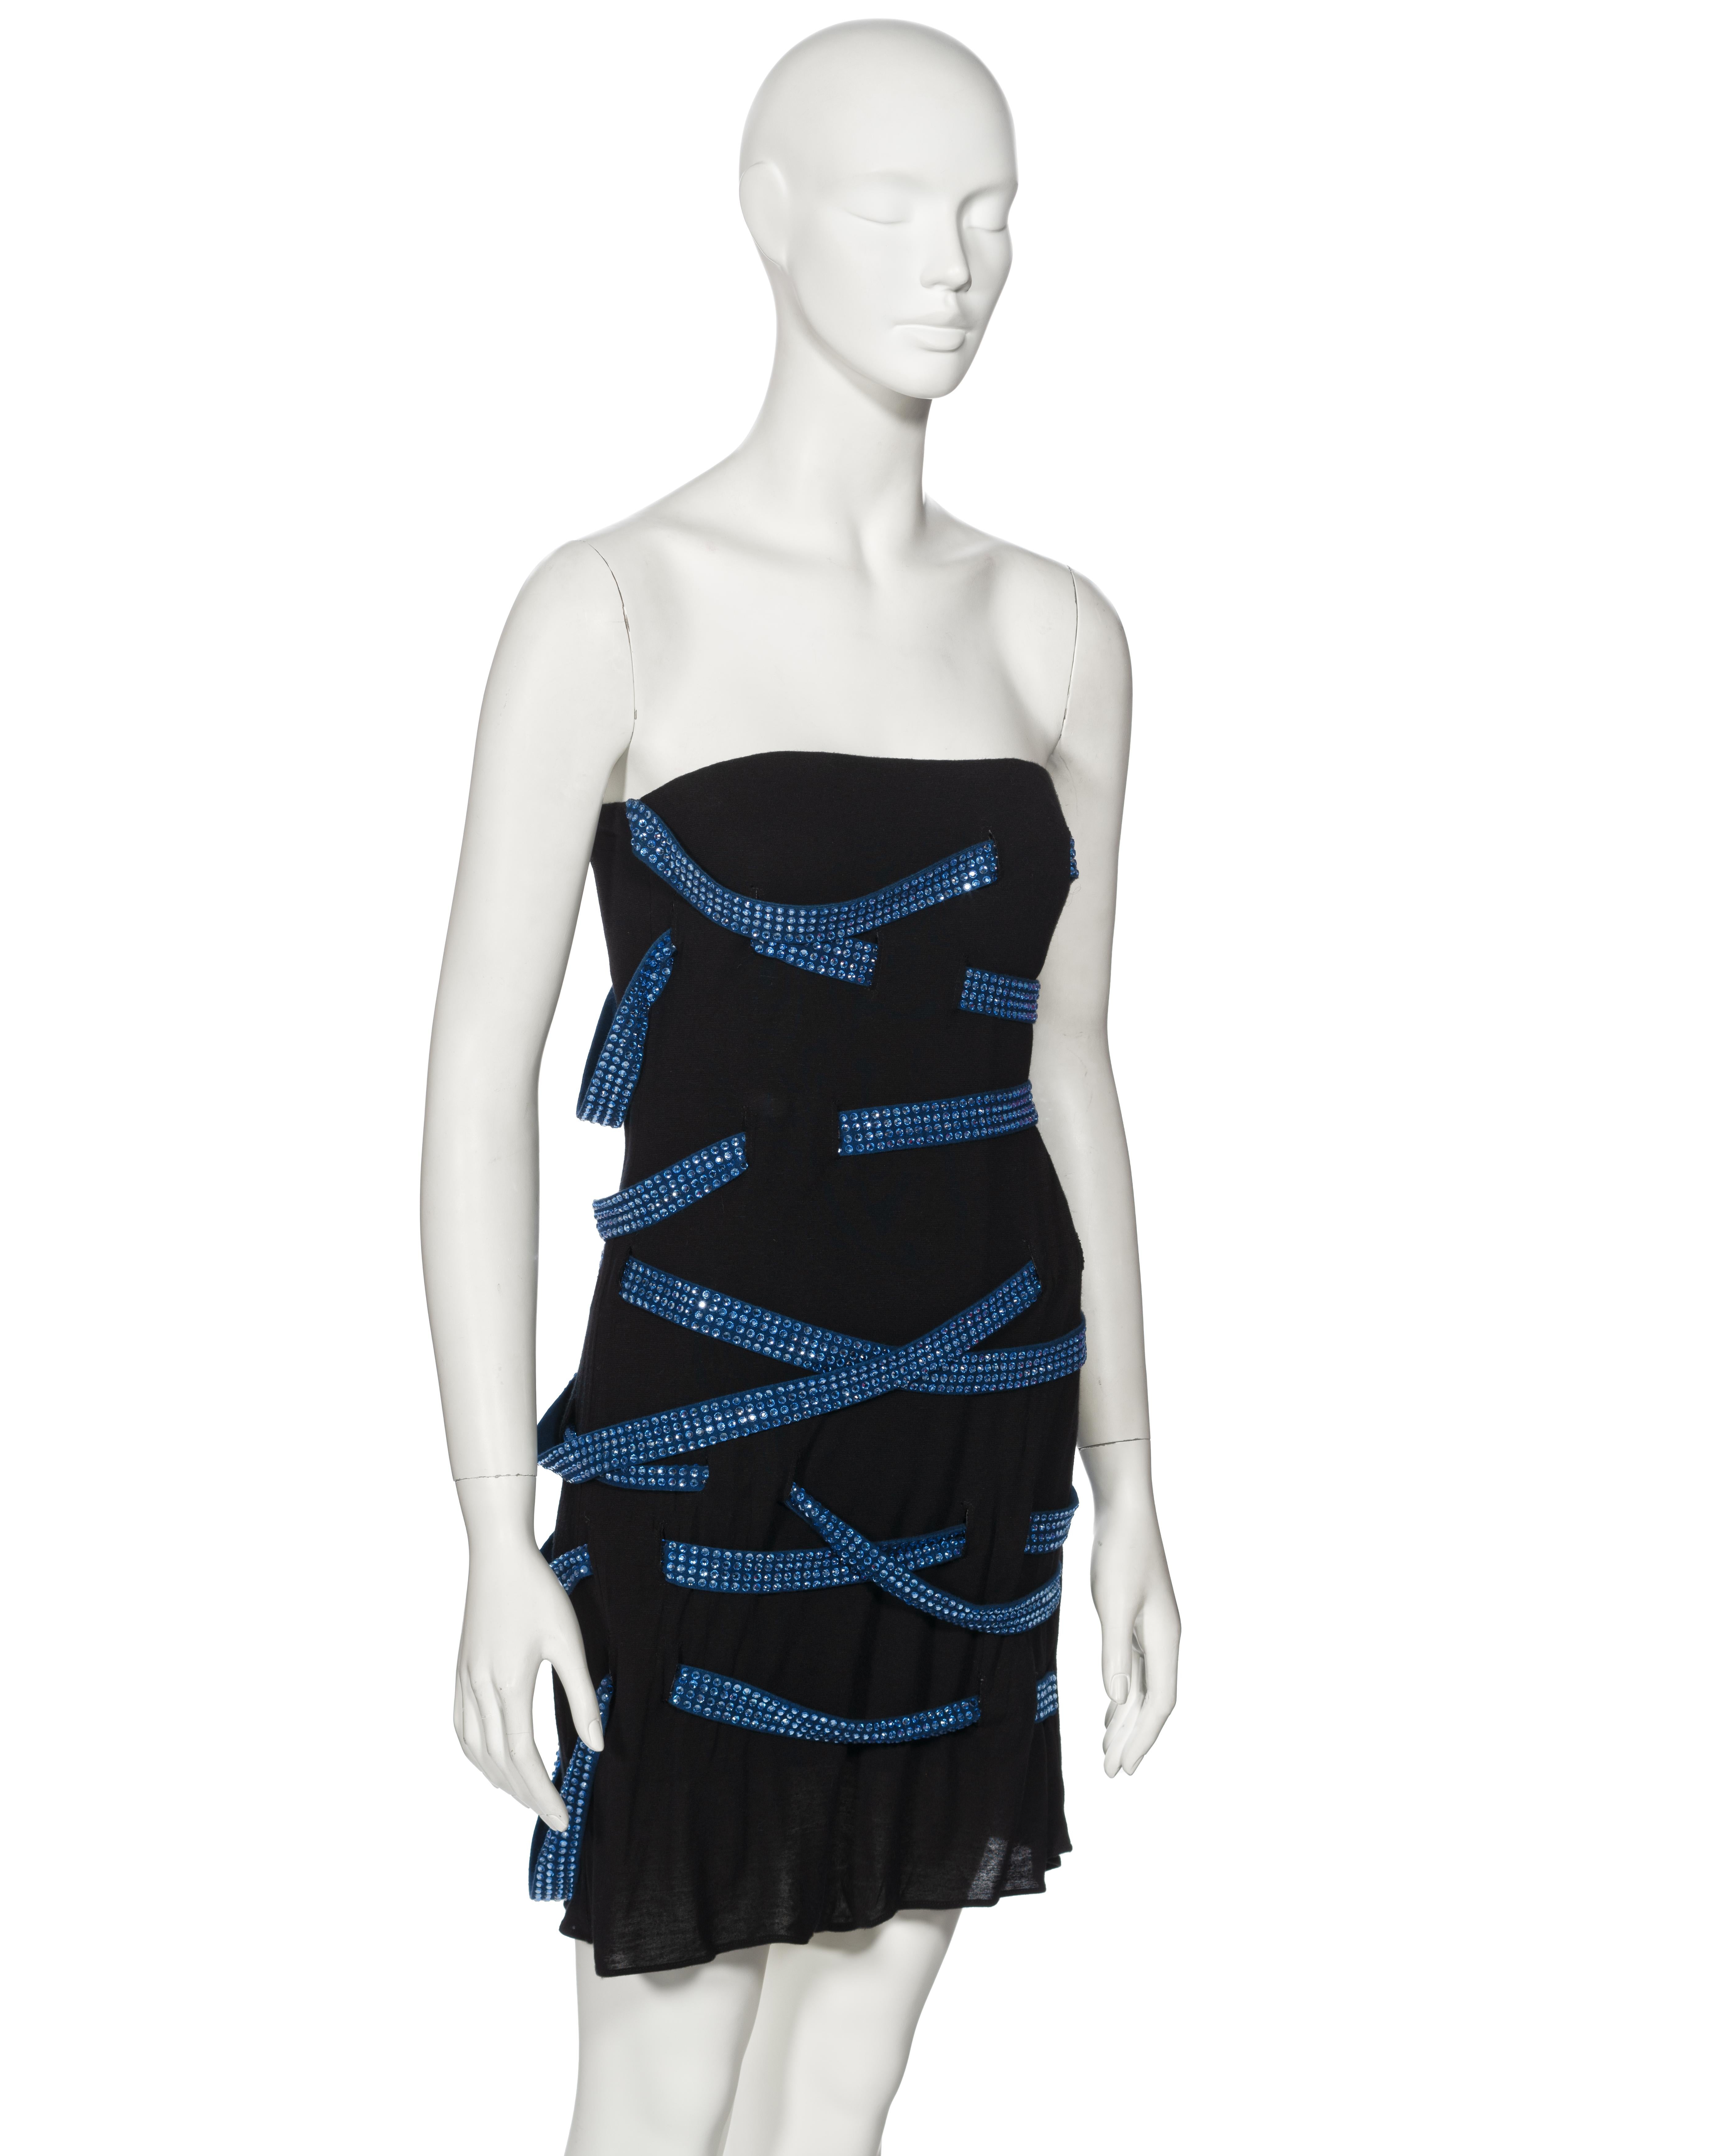 Martin Margiela Black Crystal-Laced Viscose Mini Dress, ss 2009 For Sale 3